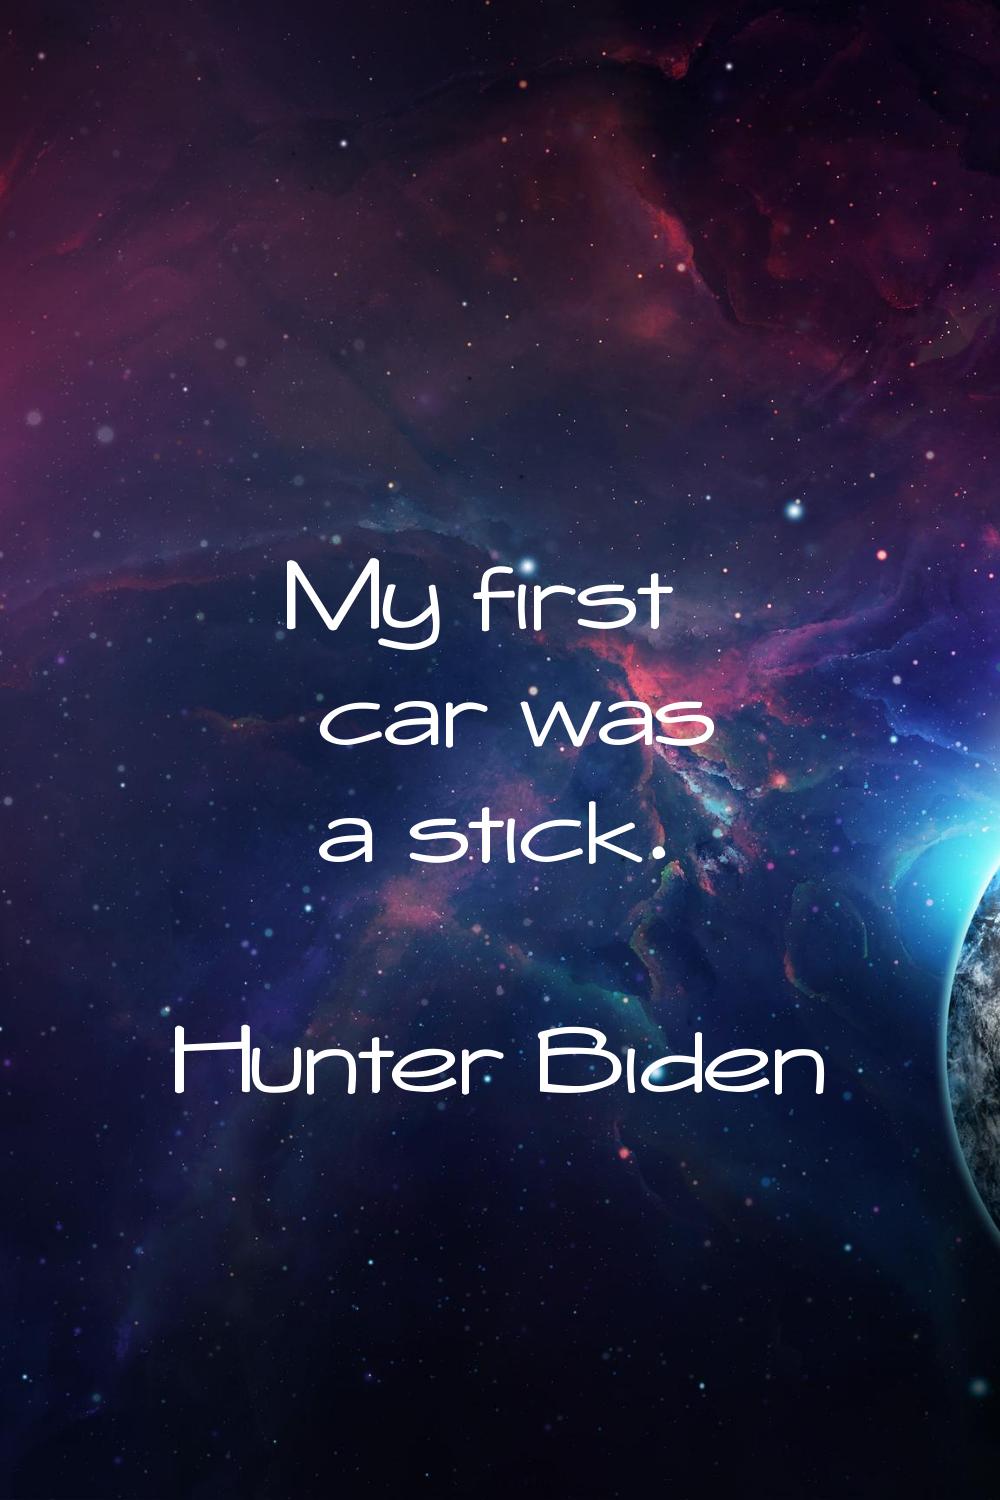 My first car was a stick.